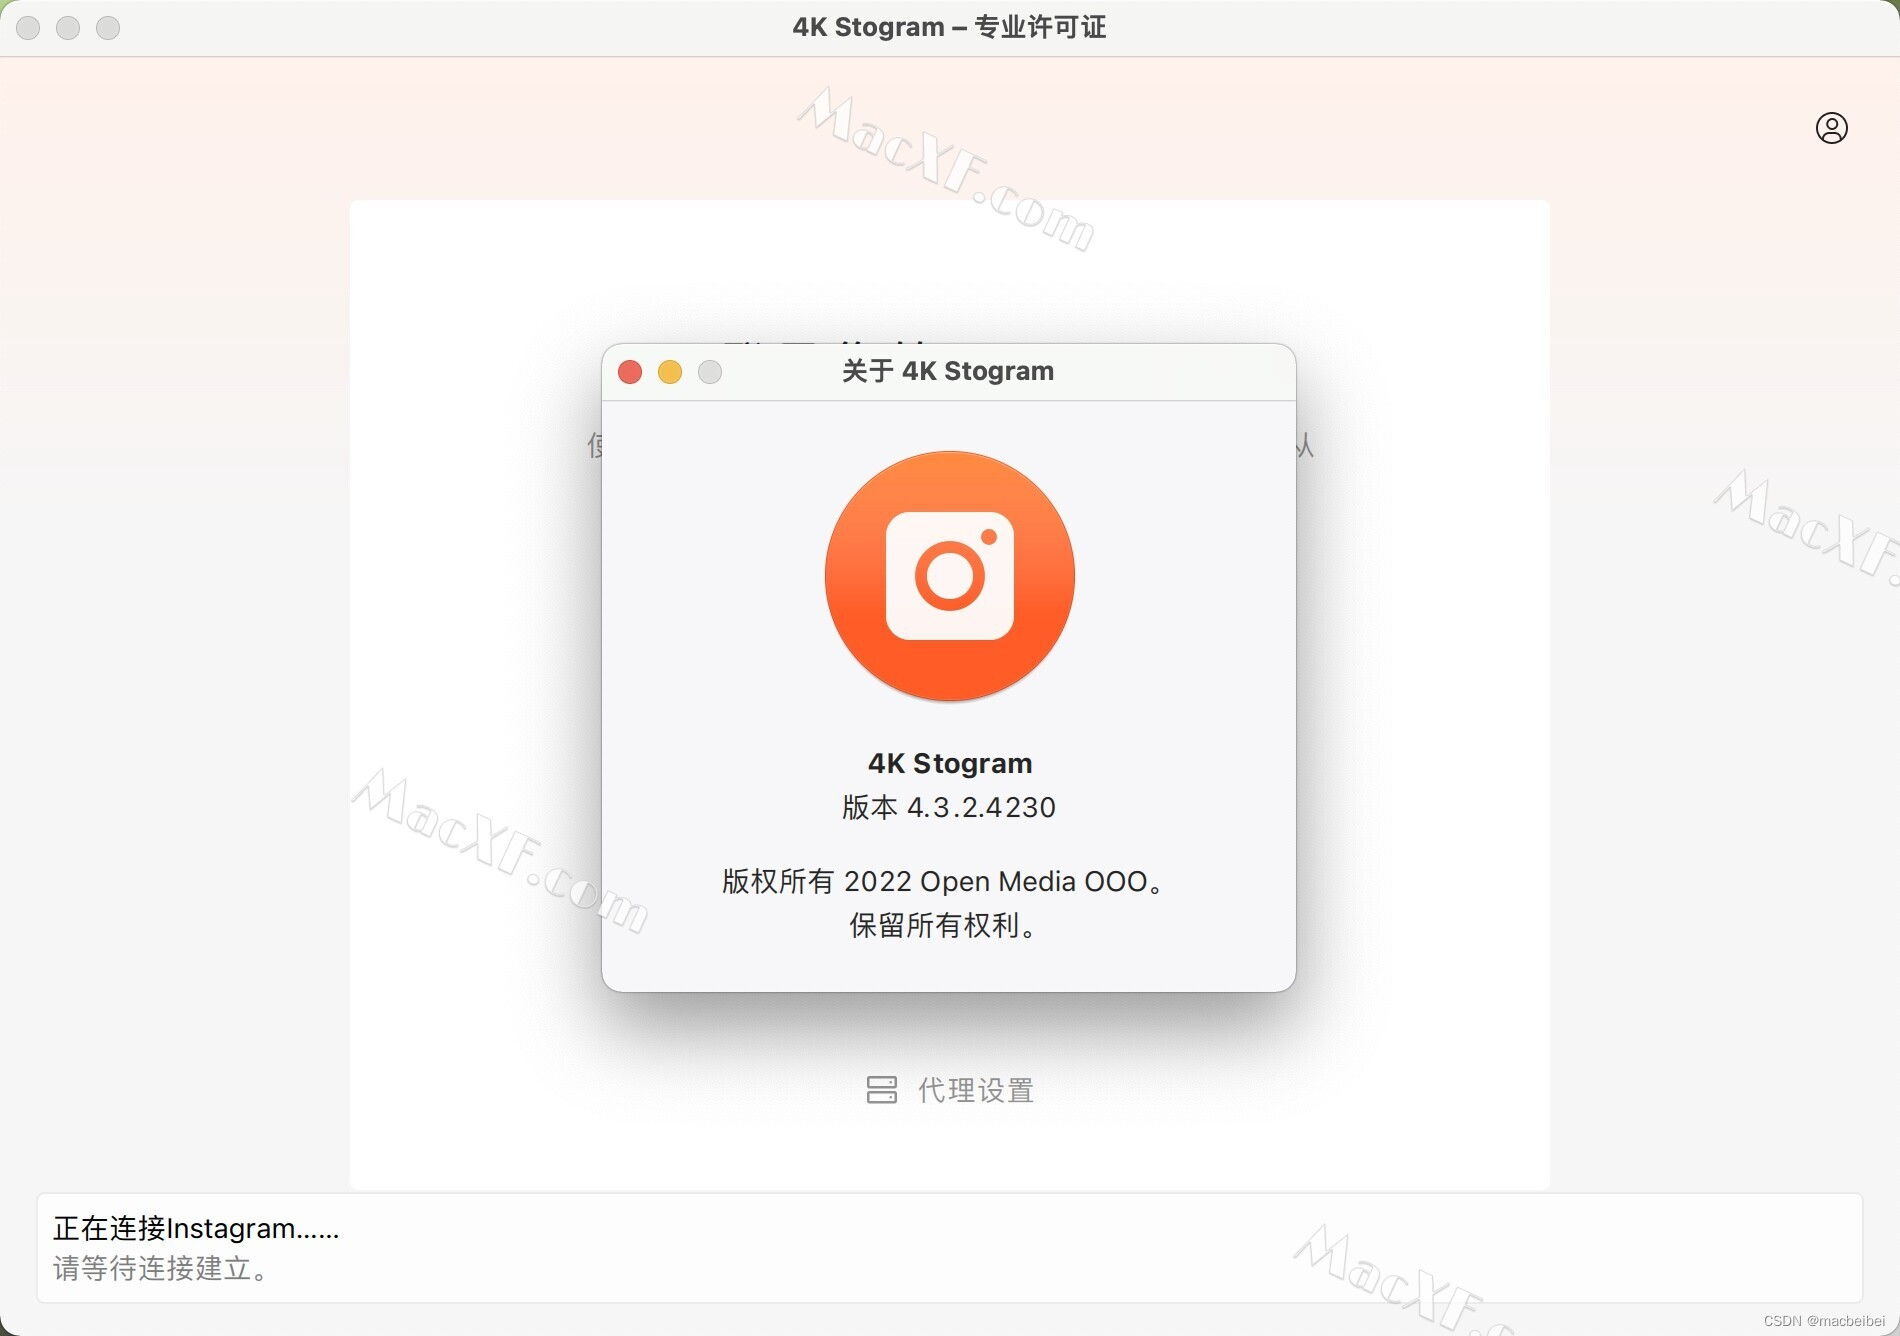 download the new version for apple 4K Stogram 4.6.3.4500